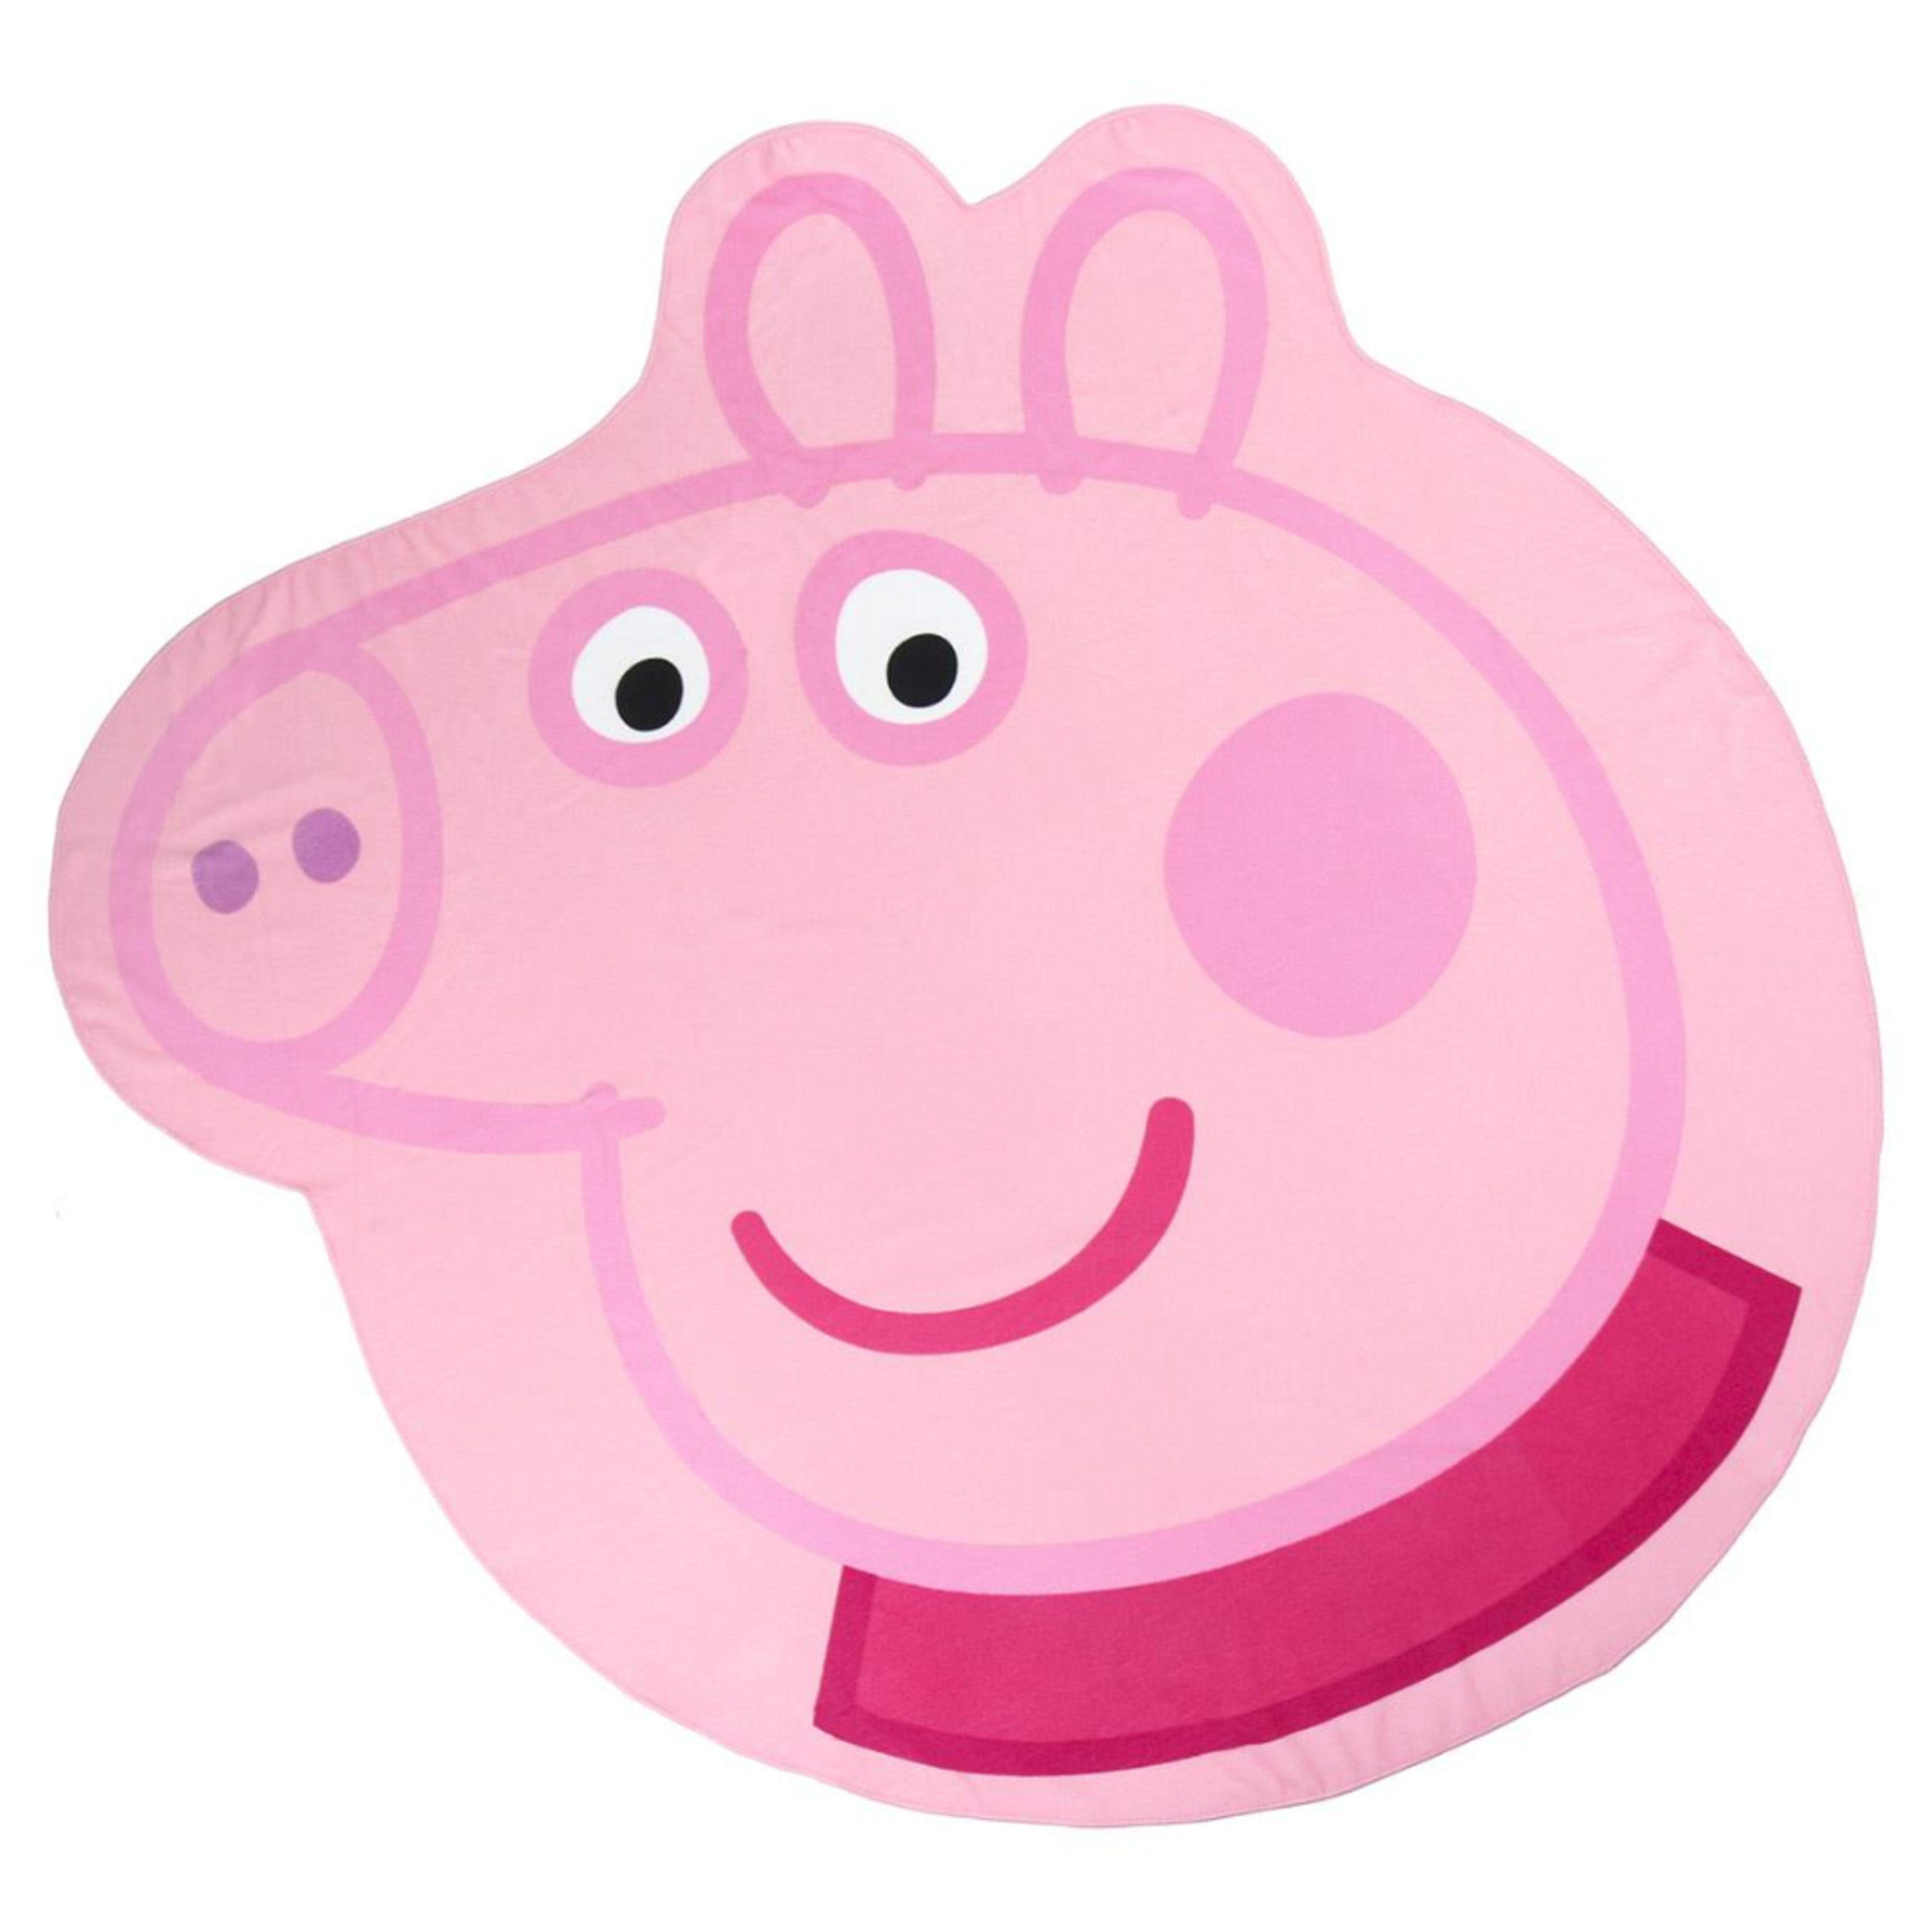 Toalha Peppa Pig 64307 Licencias - rosa - 